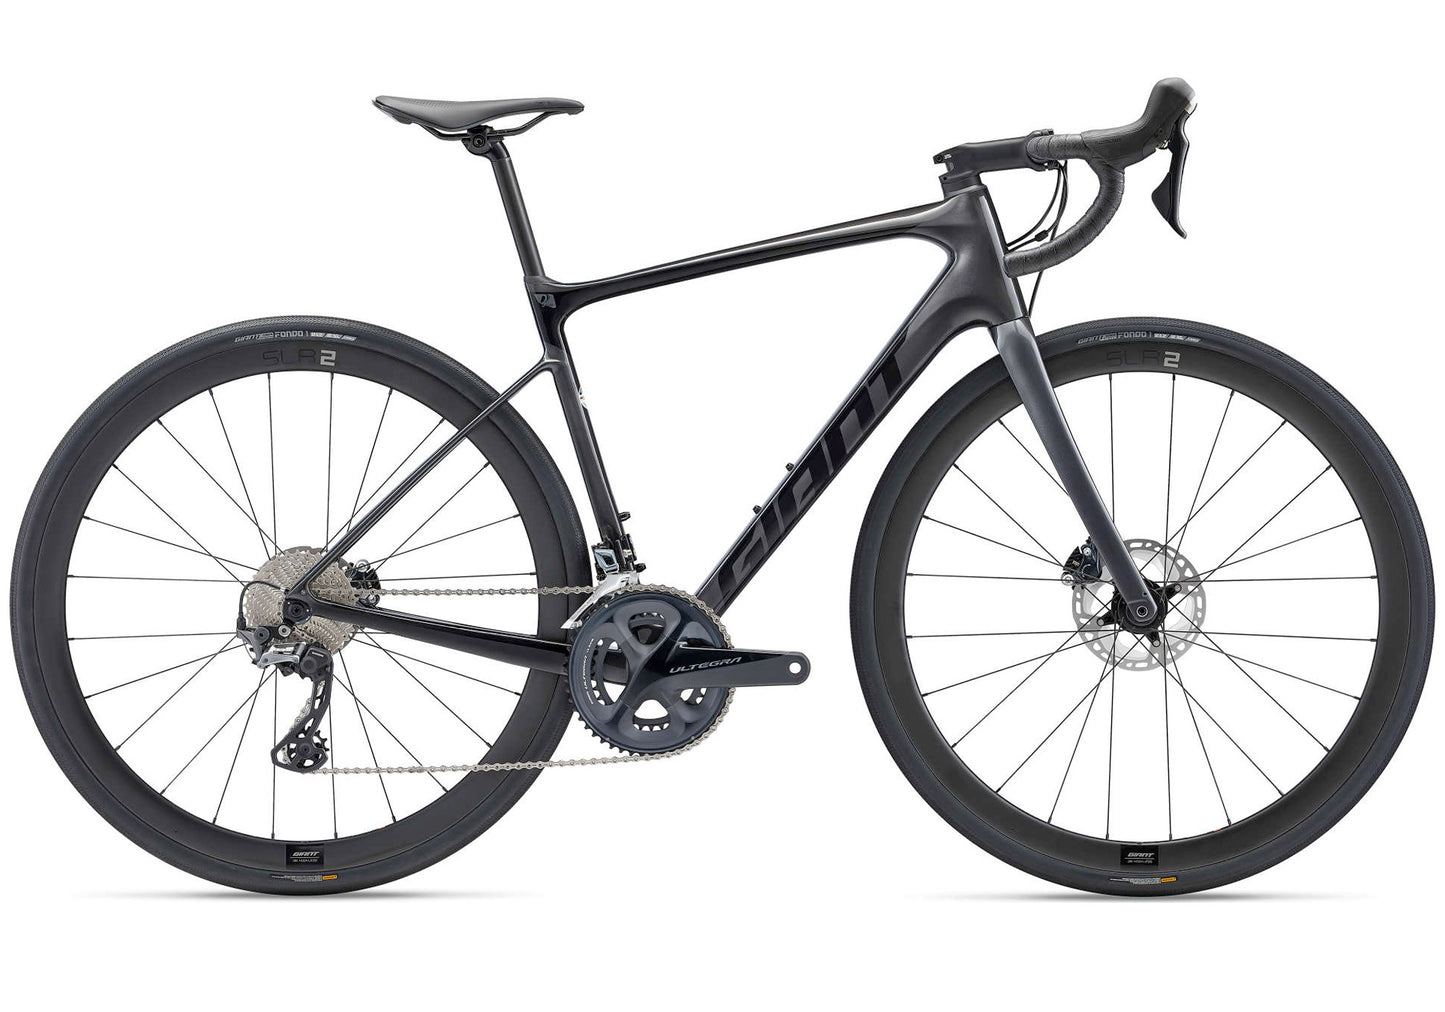 2022 Giant Defy Advanced Pro 2 Ultegra Mens Road Bike - Black Chrome buy online at Woolys Wheels Sydney